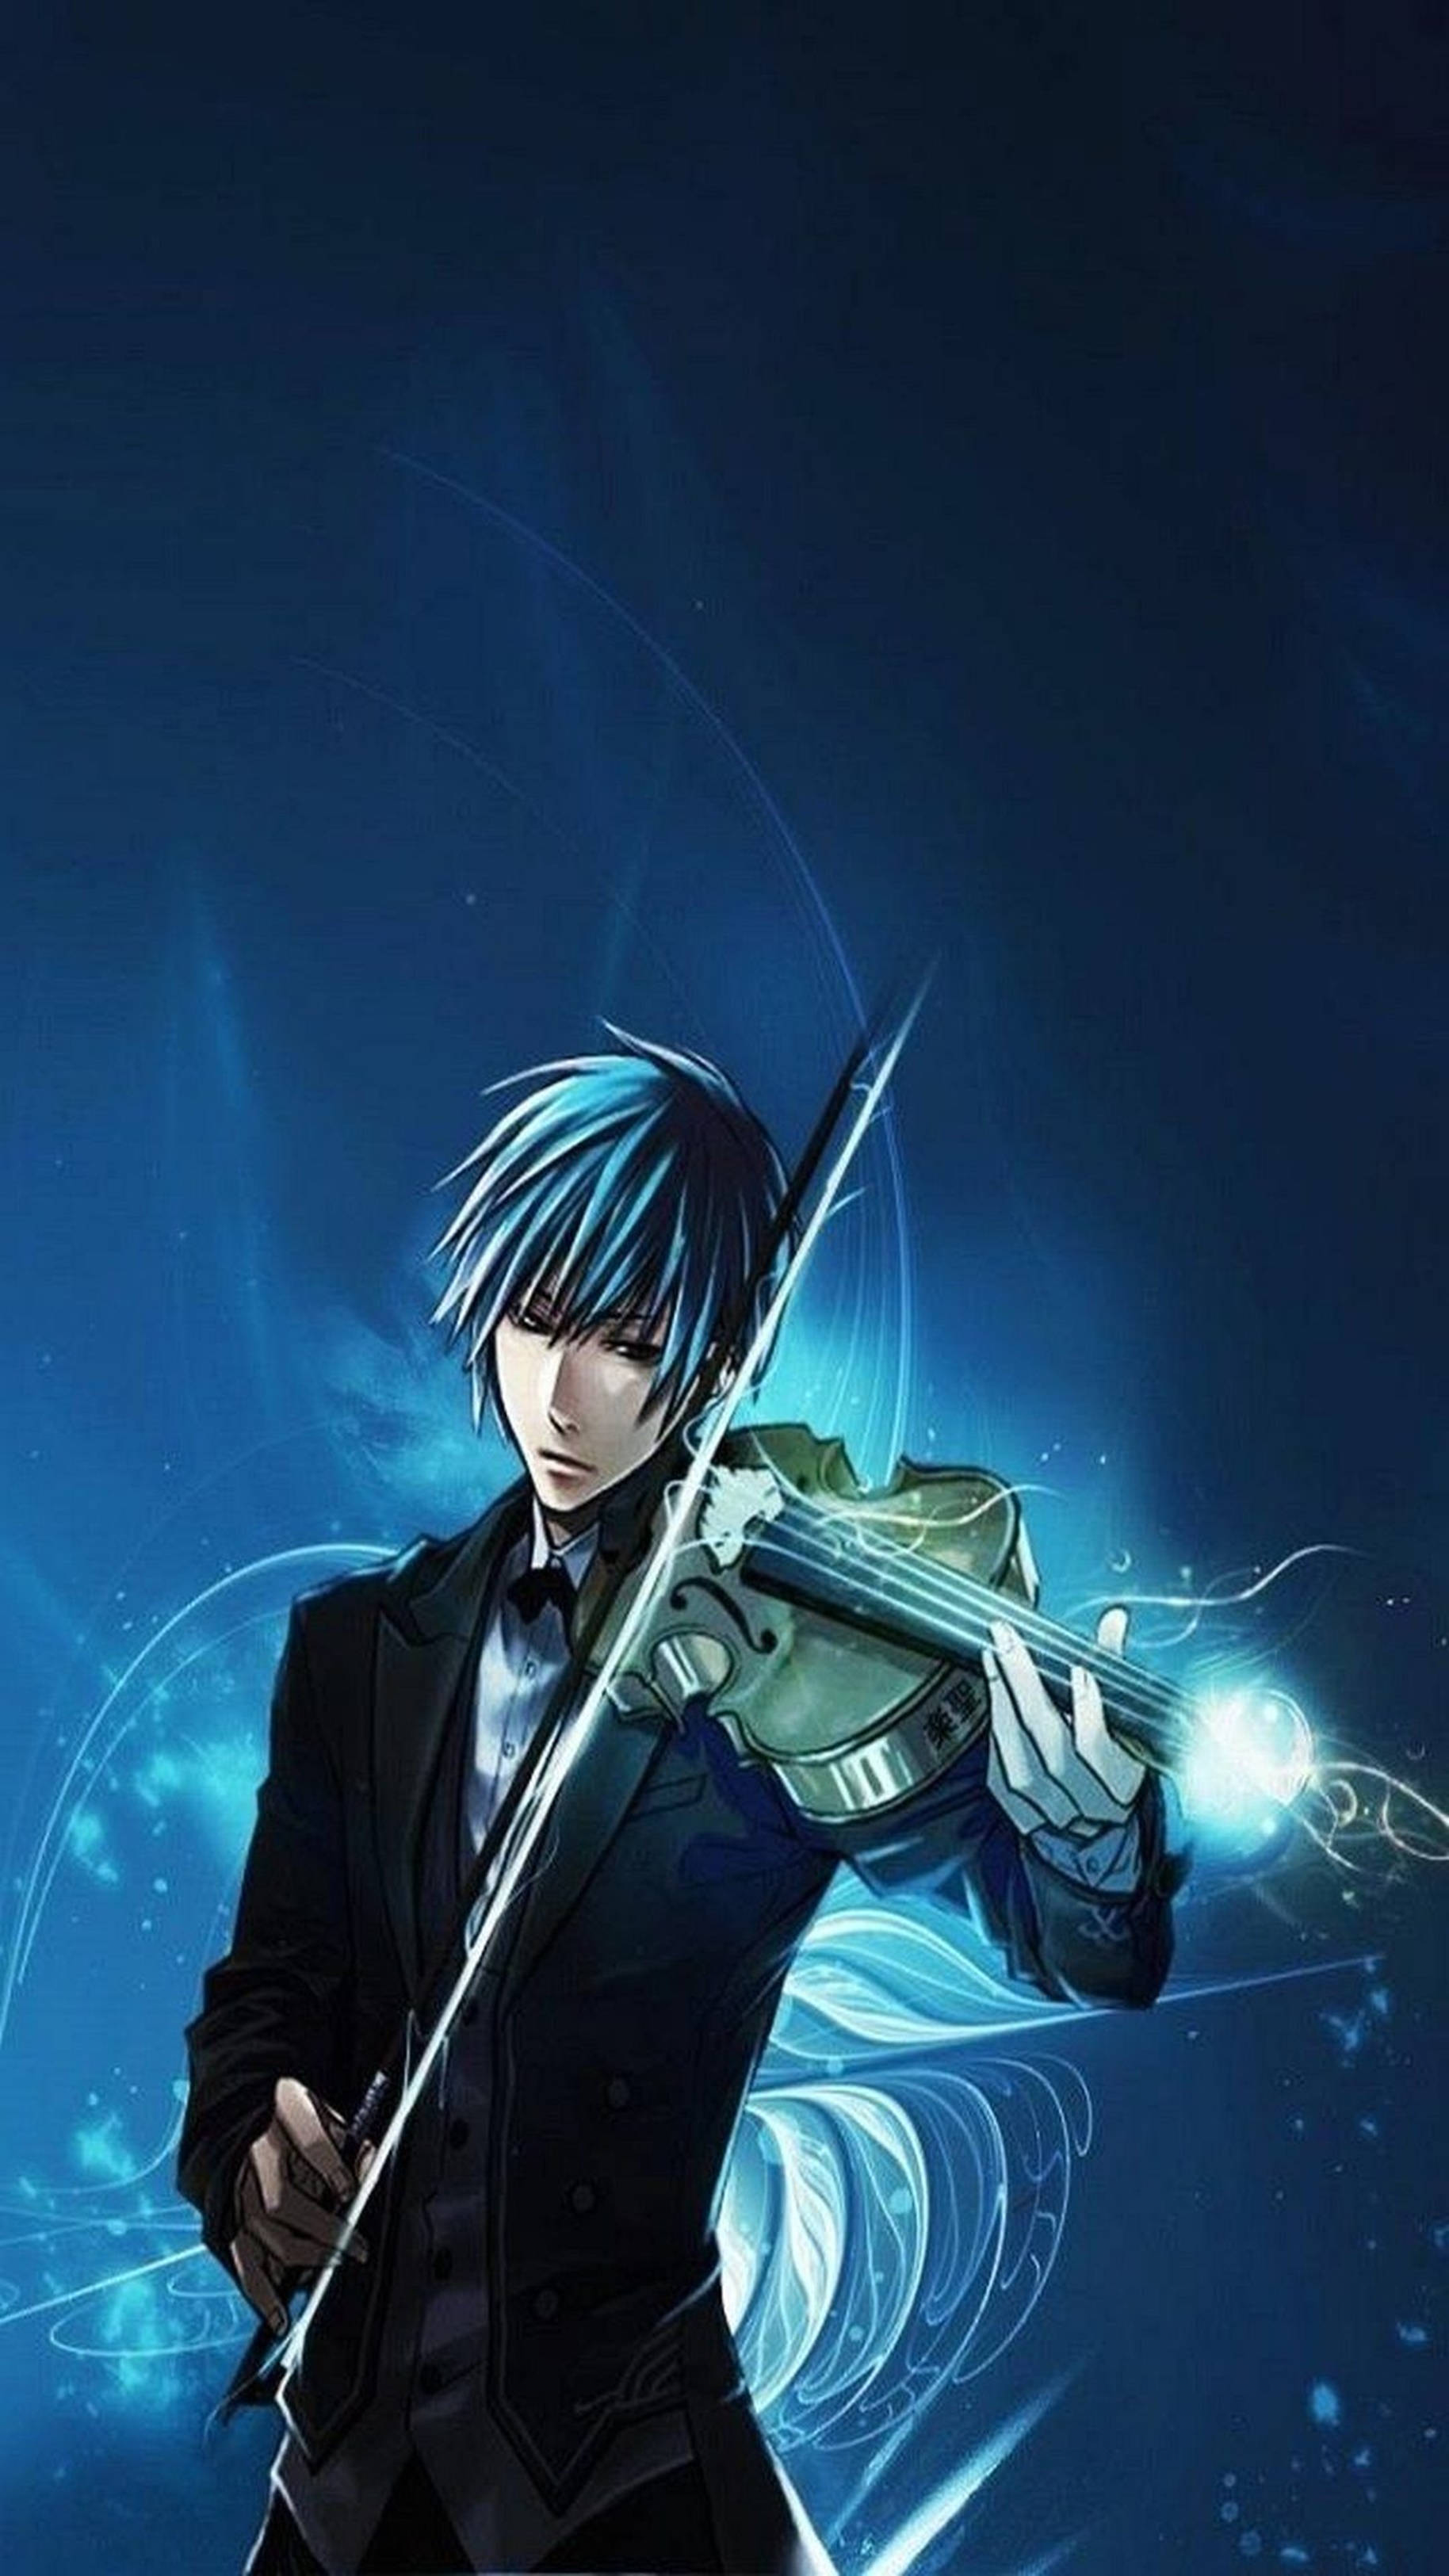 4K Anime IPhone Guy Playing Violin Wallpaper